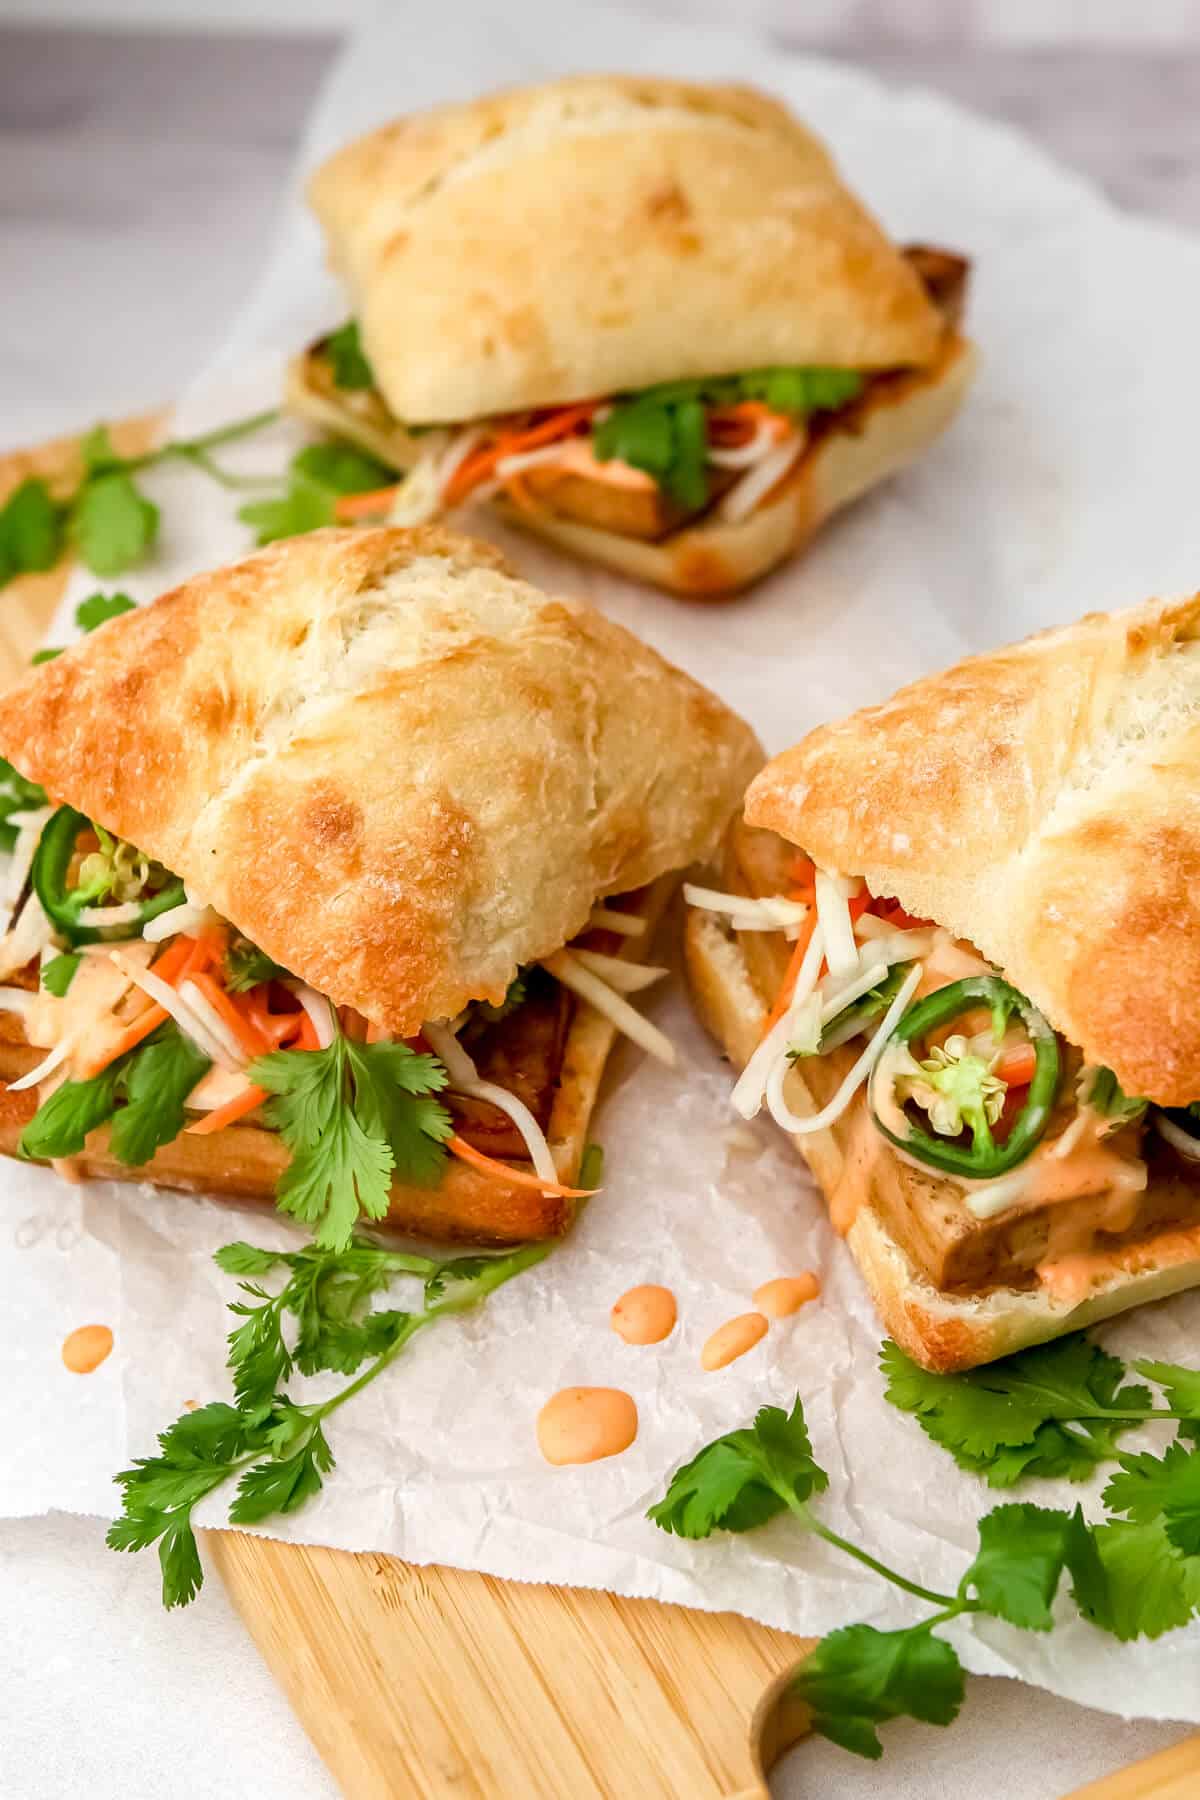 Tofu Bahn Mi sandwiches with pickled carrots, daikon, and vegan siracha mayo.